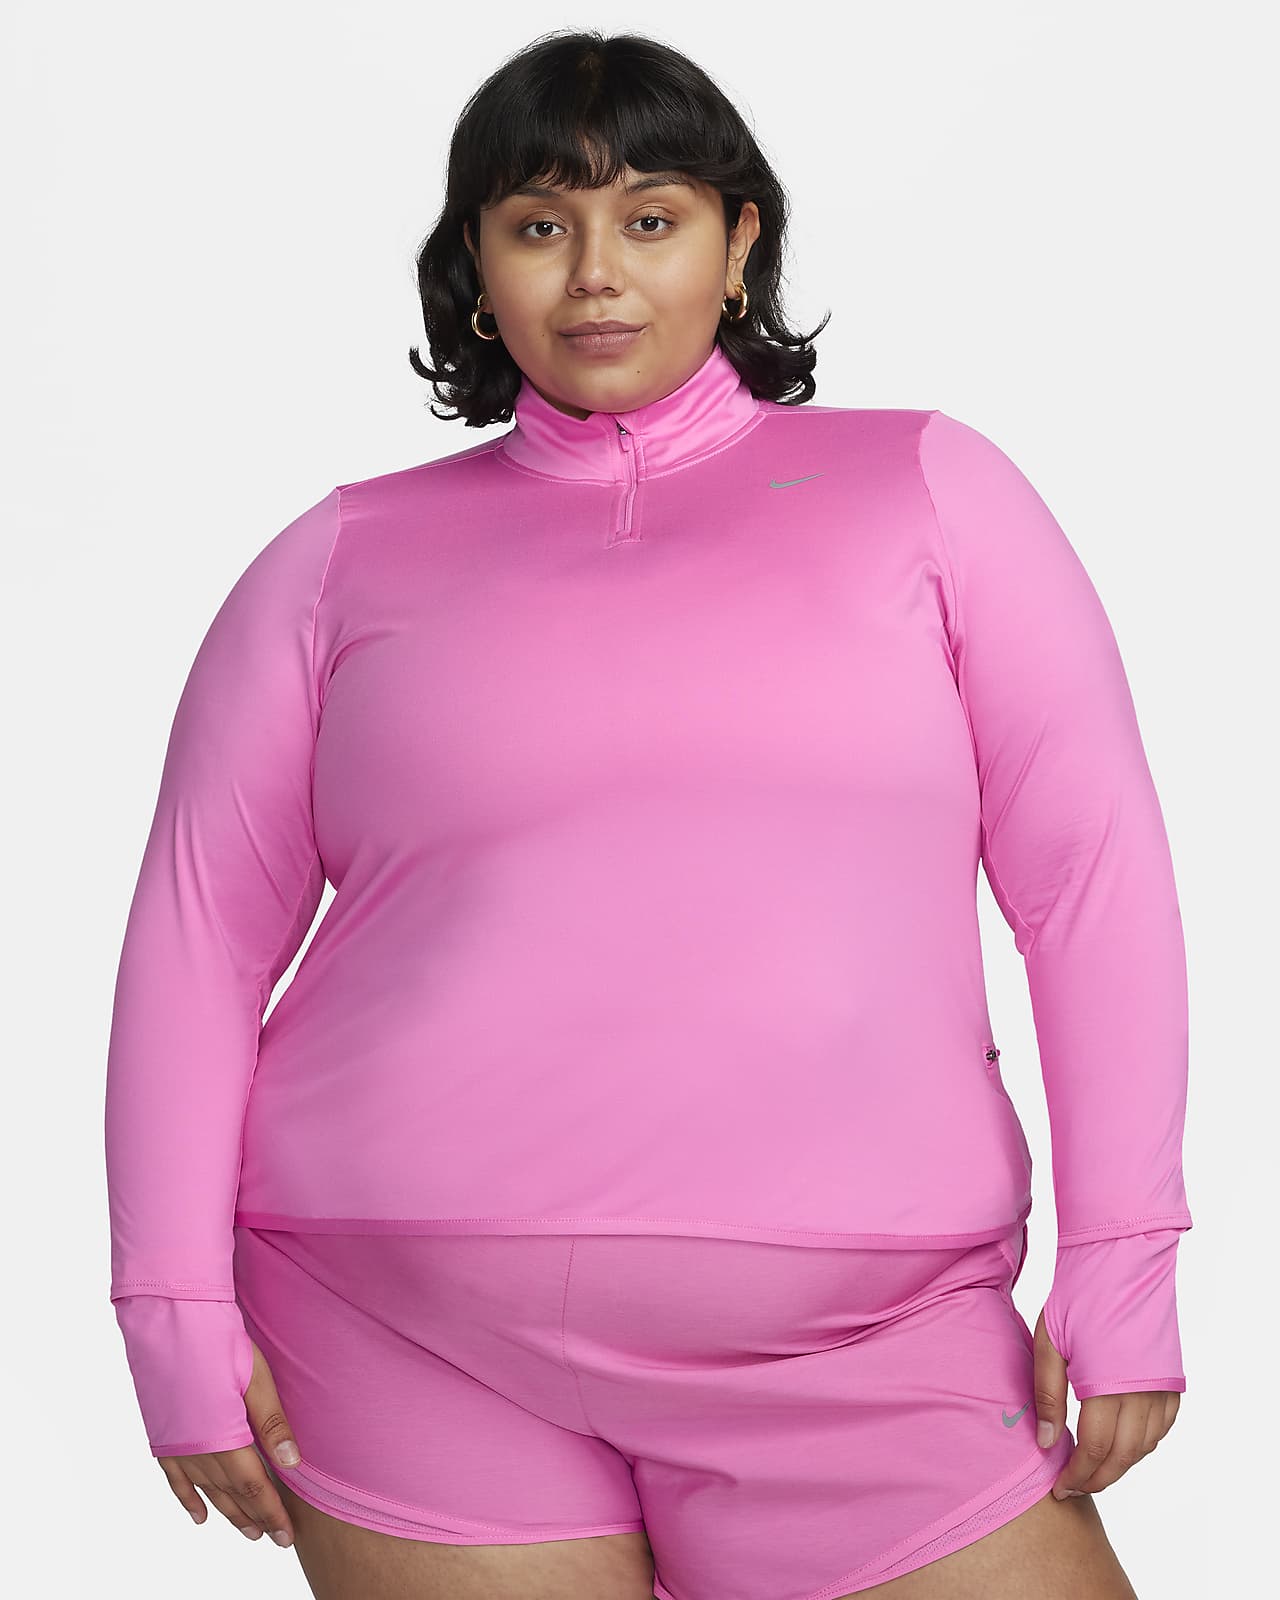 Nike Dri-FIT One Women's Standard Fit Long-Sleeve Top (Plus Size)